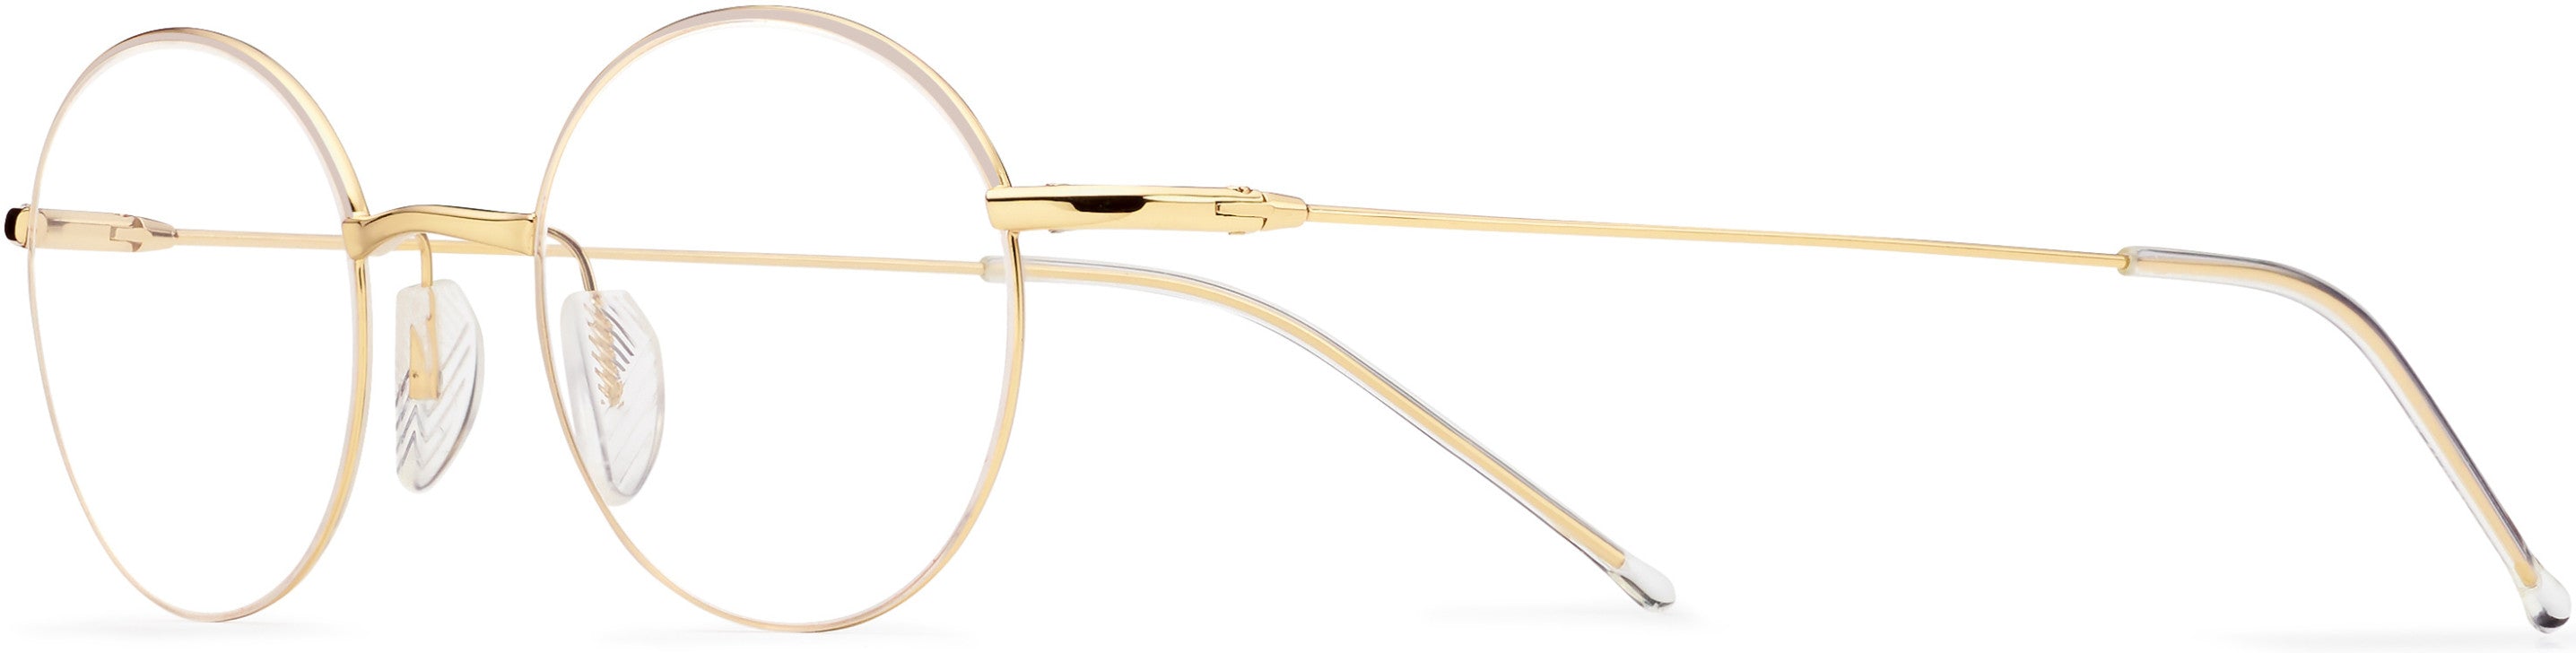 Safilo 2.0 Linea 04 Oval Modified Eyeglasses 0J5G-0J5G  Gold (00 Demo Lens)